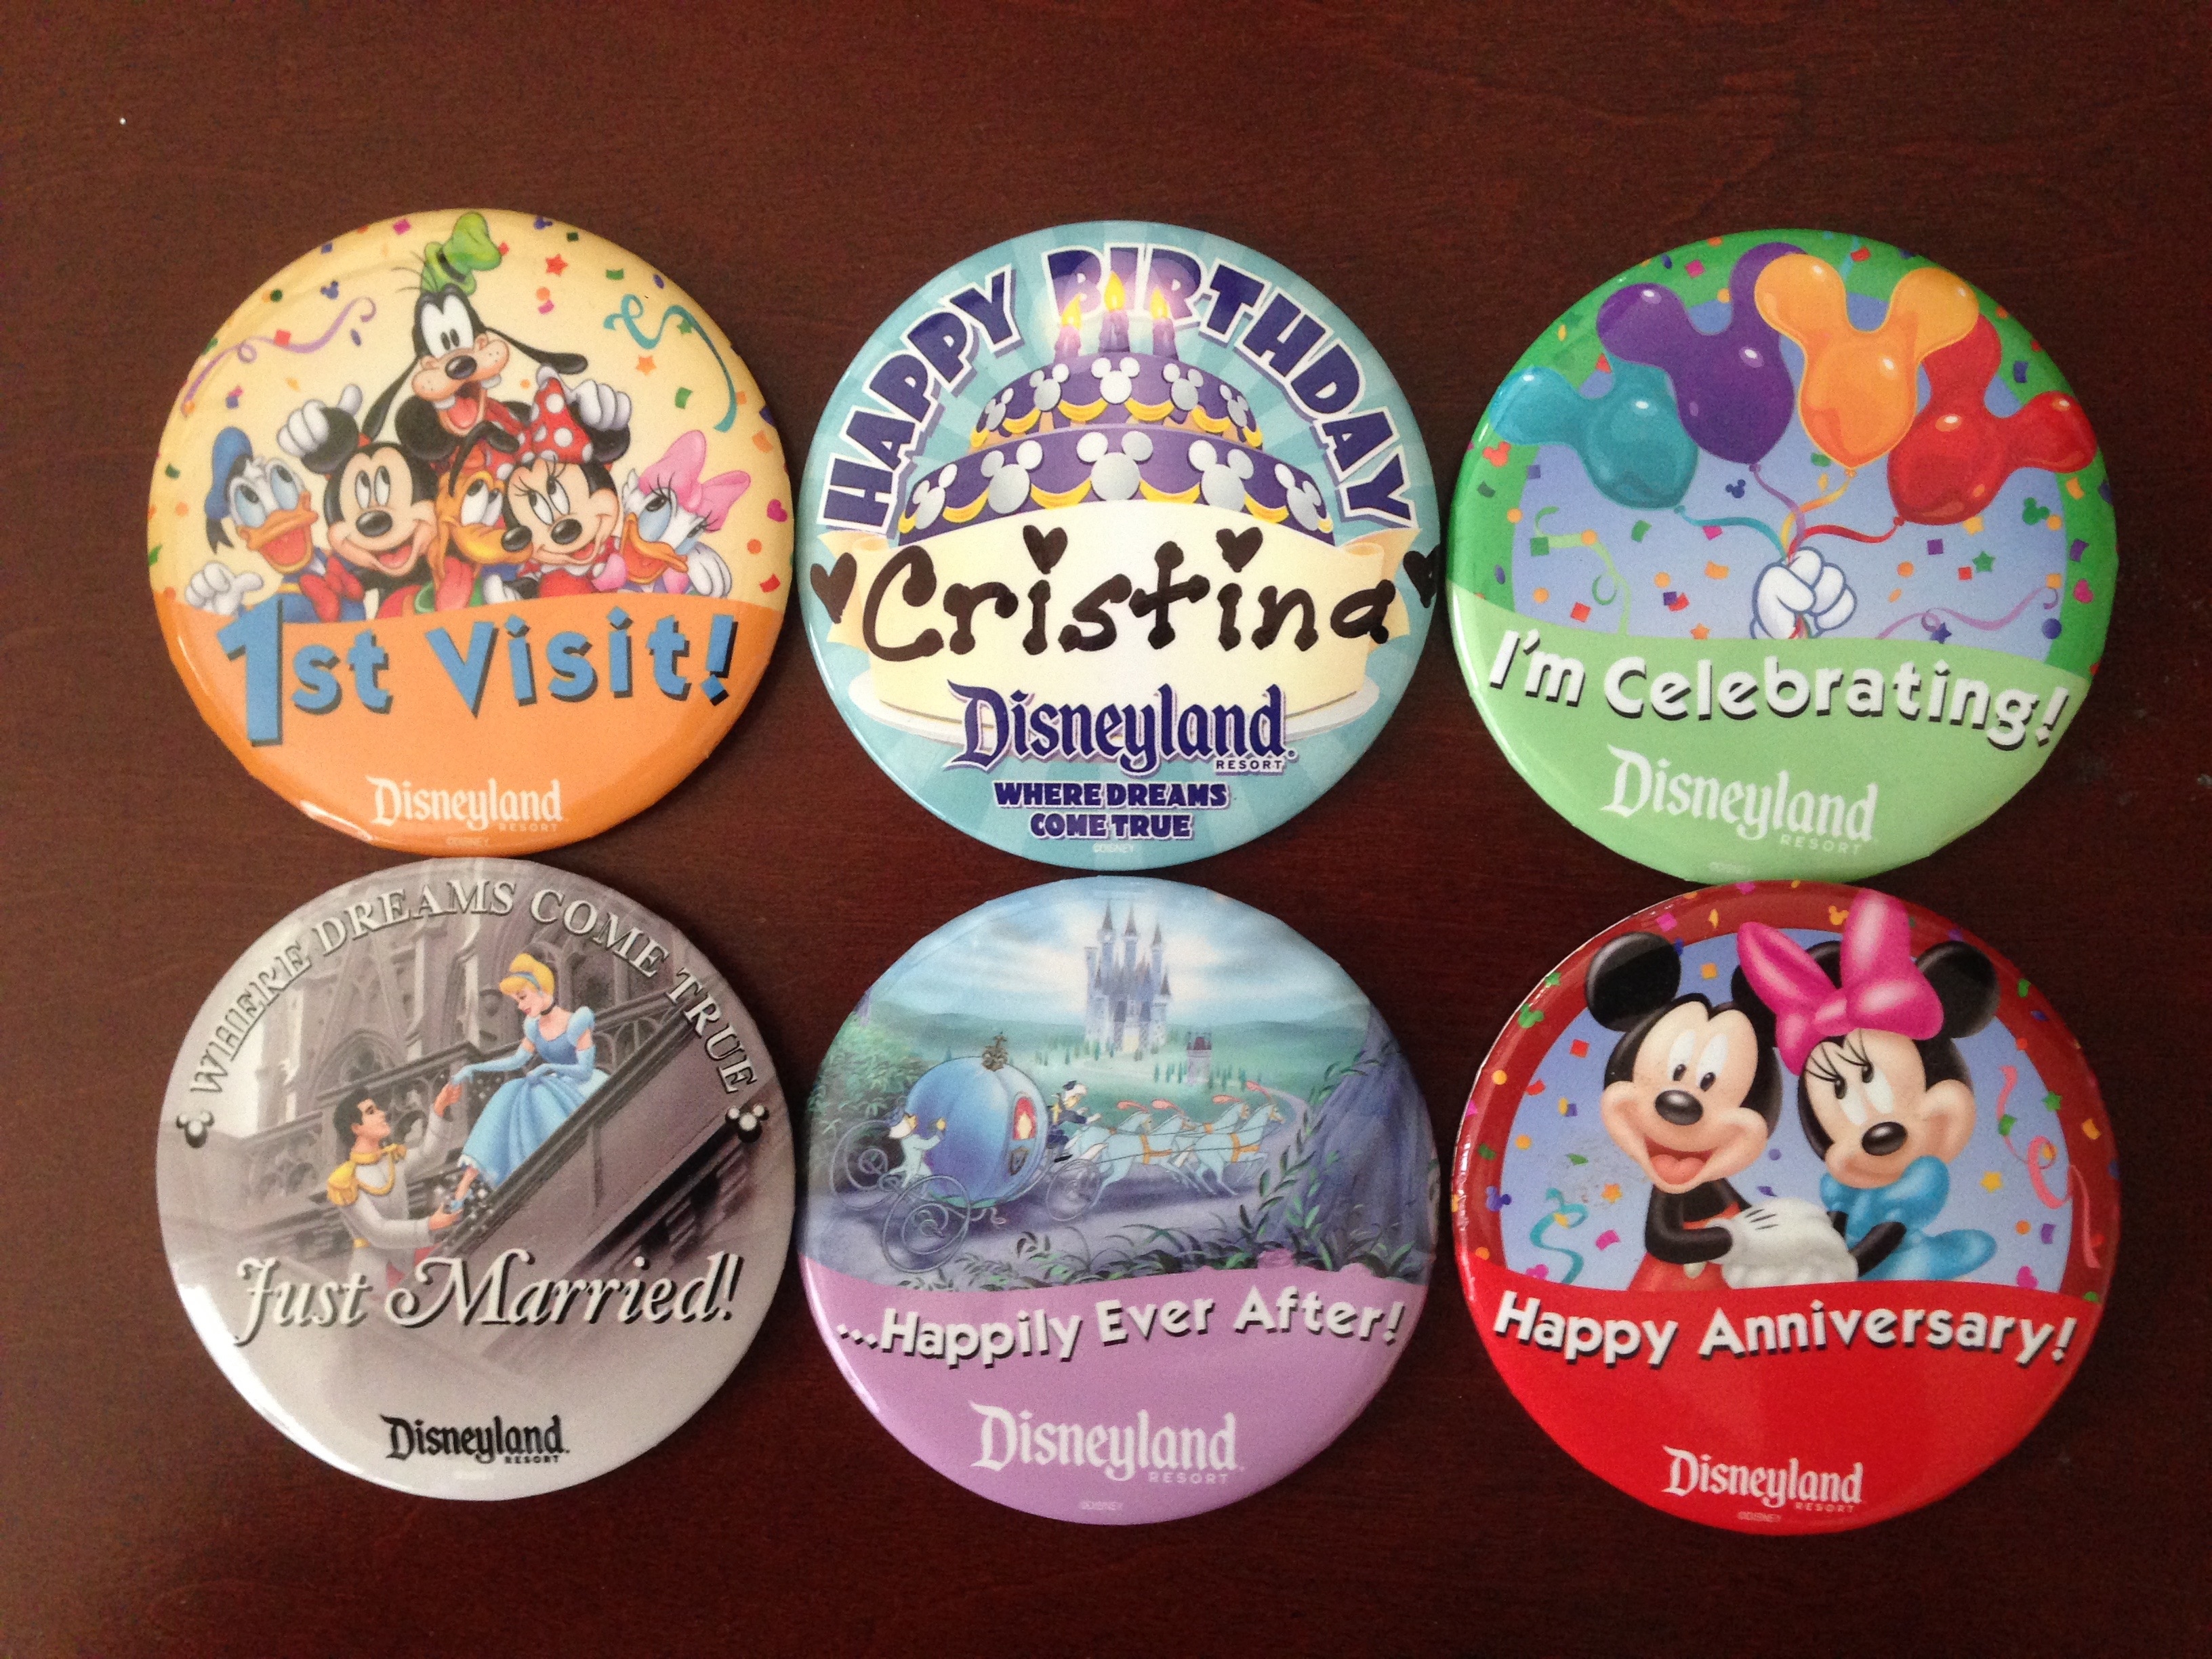 Free Souvenirs at The Disneyland Resort